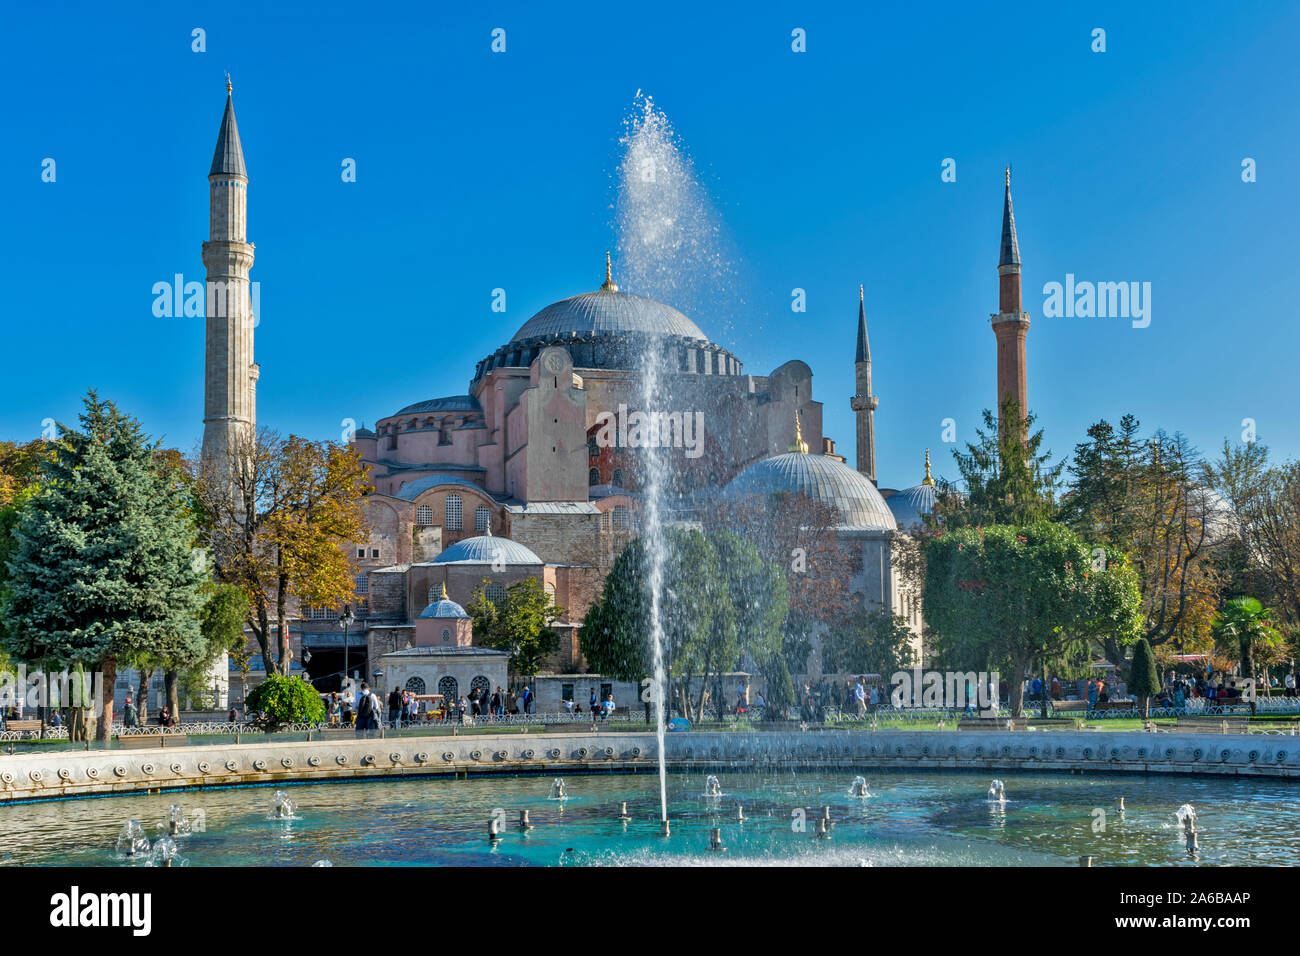 ISTANBUL TURKEY HAGIA SOPHIA DOME AND MINARETS WITH A FOUNTAIN AND SPRAY Stock Photo